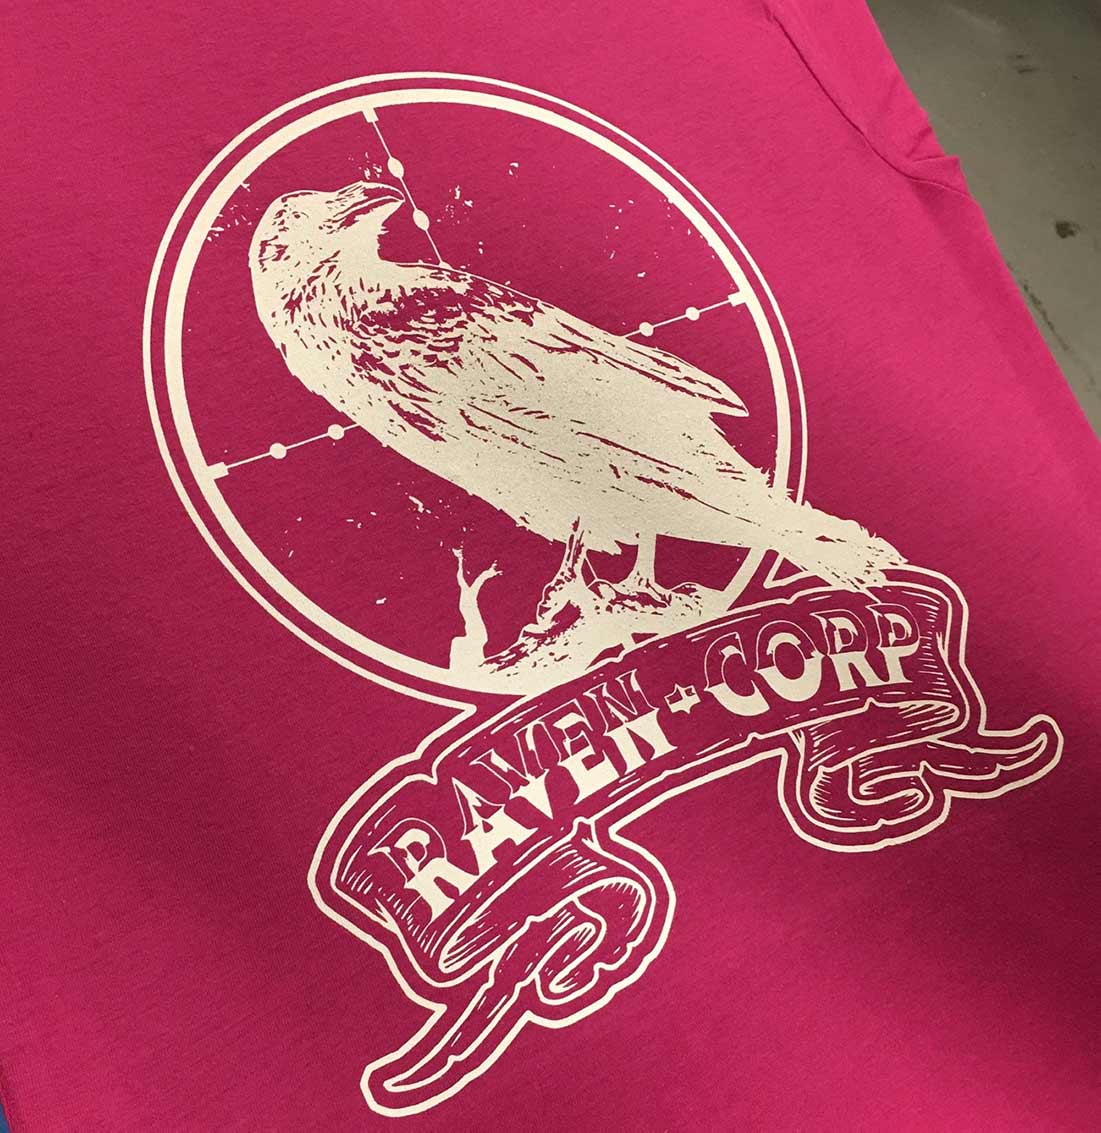 Raven Corp Montana custom printed shirt